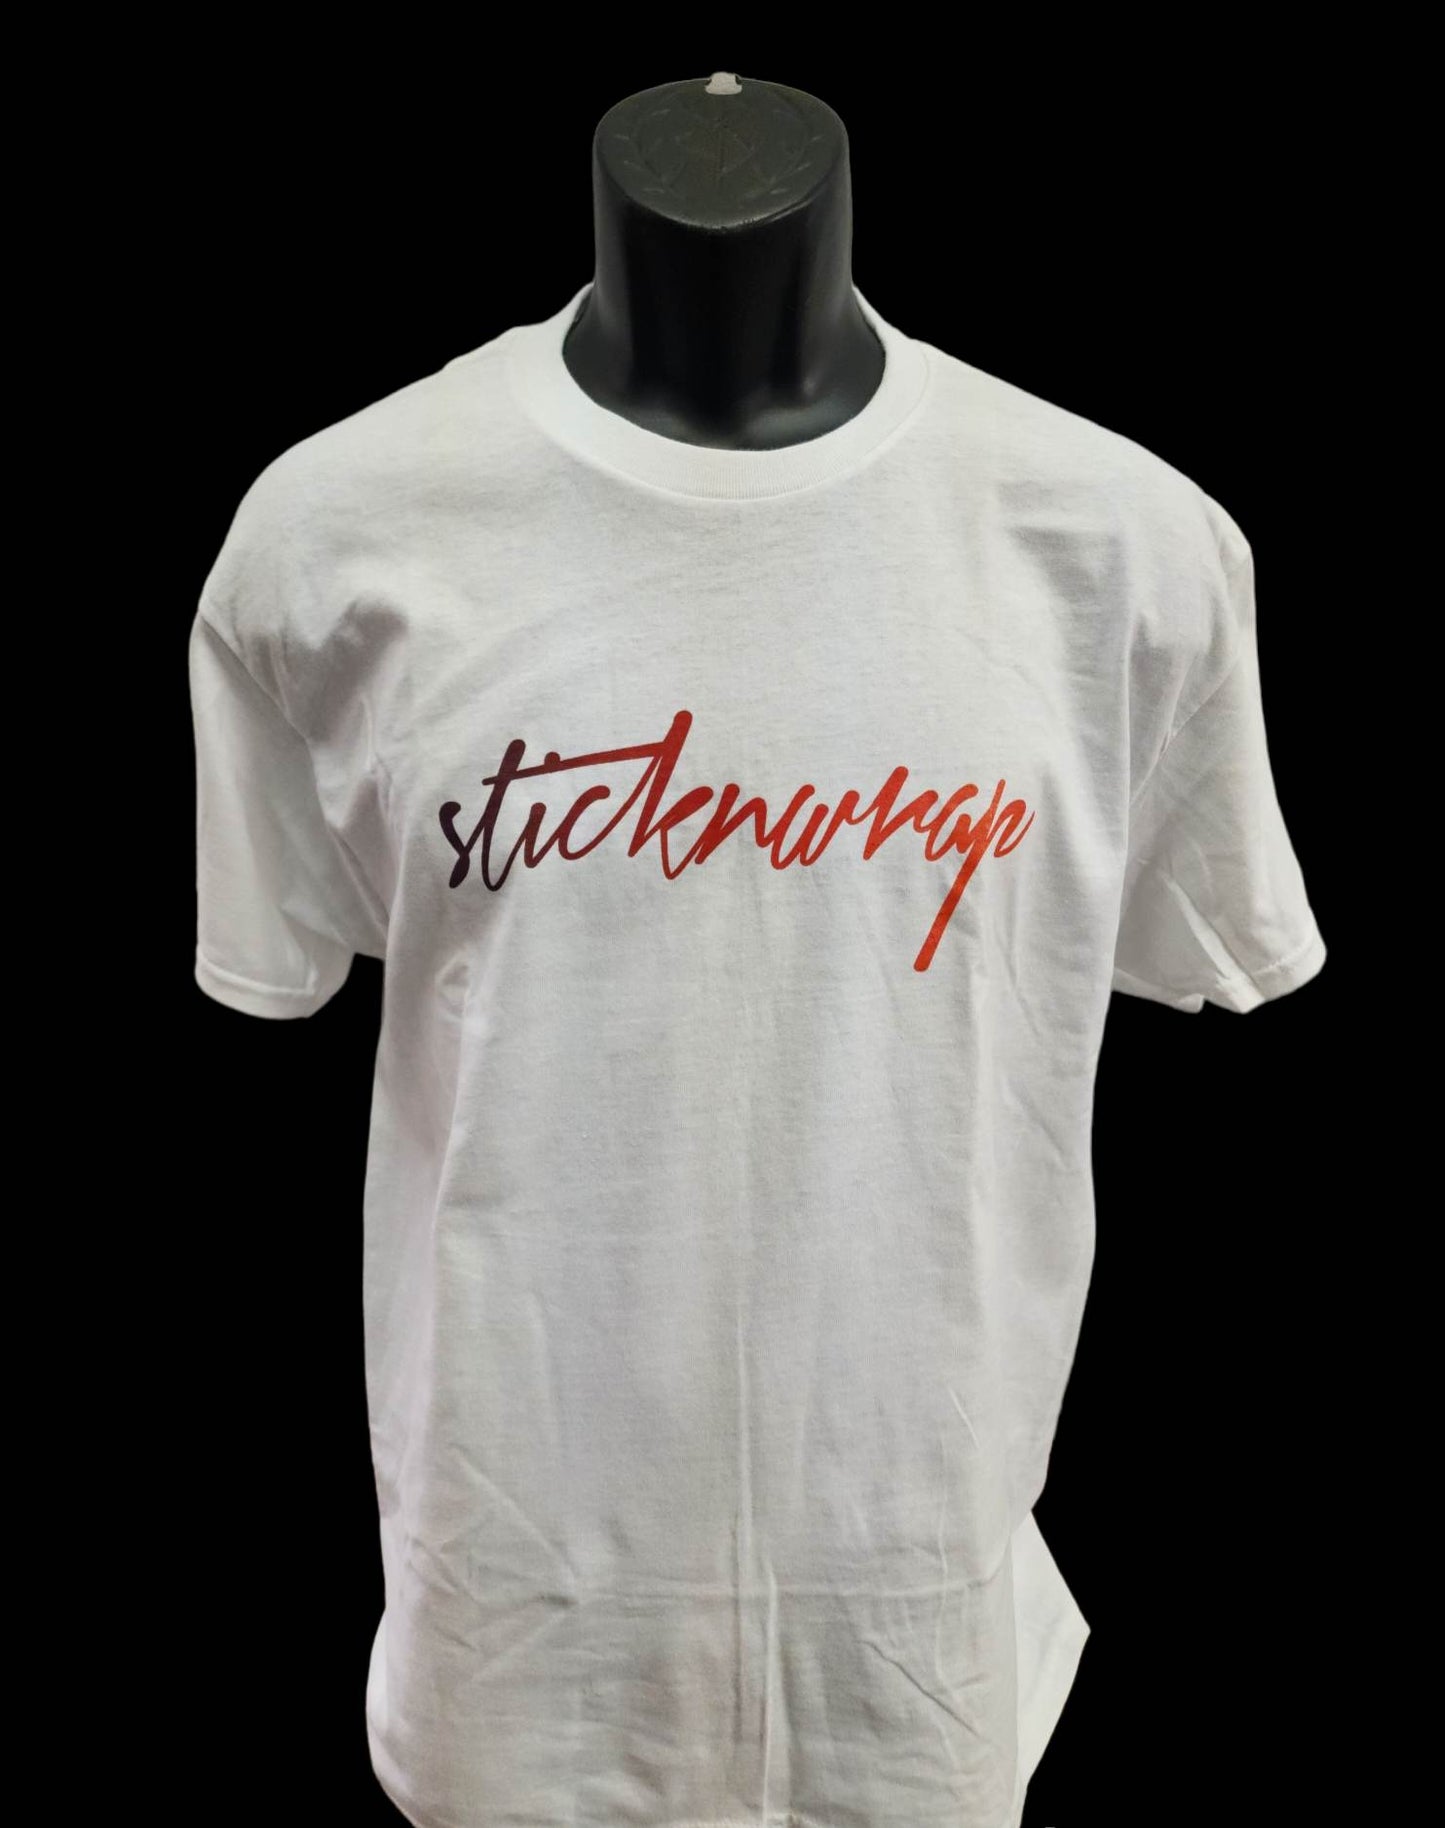 2tone Sticknwrap Shirt